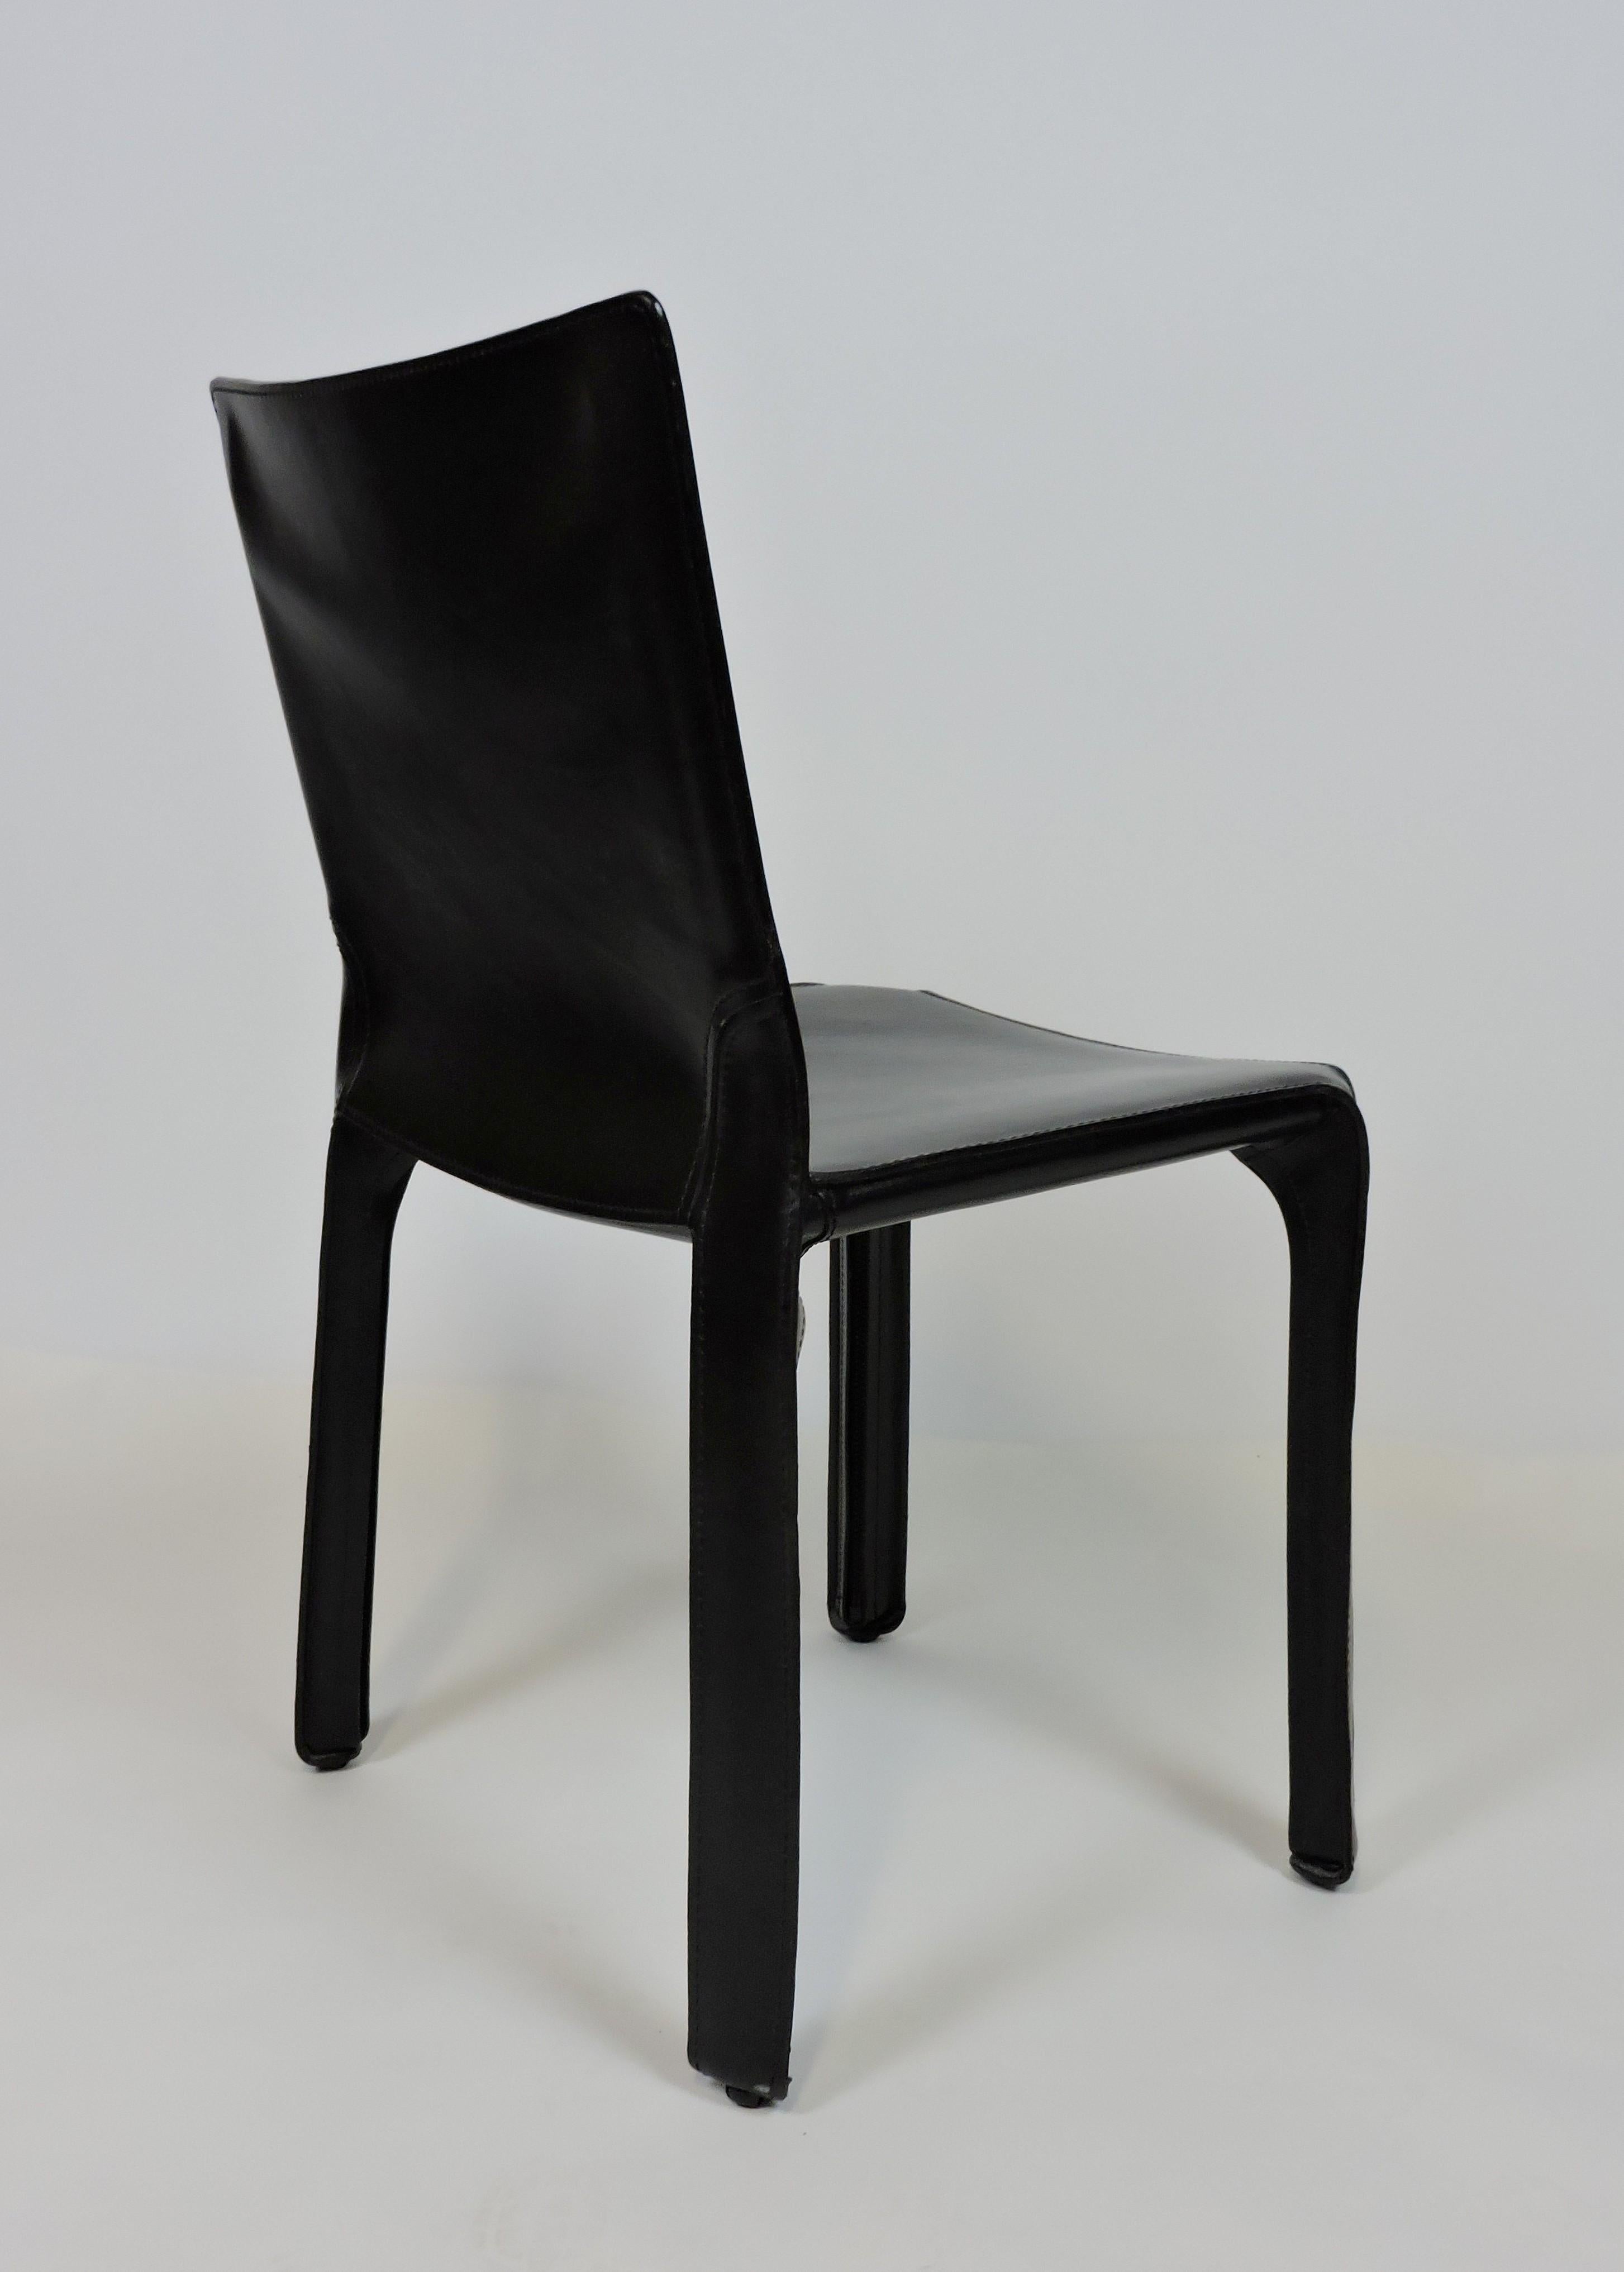 Mario Bellini CAB 412 Italian Modern Black Leather Side Chair for Cassina 1